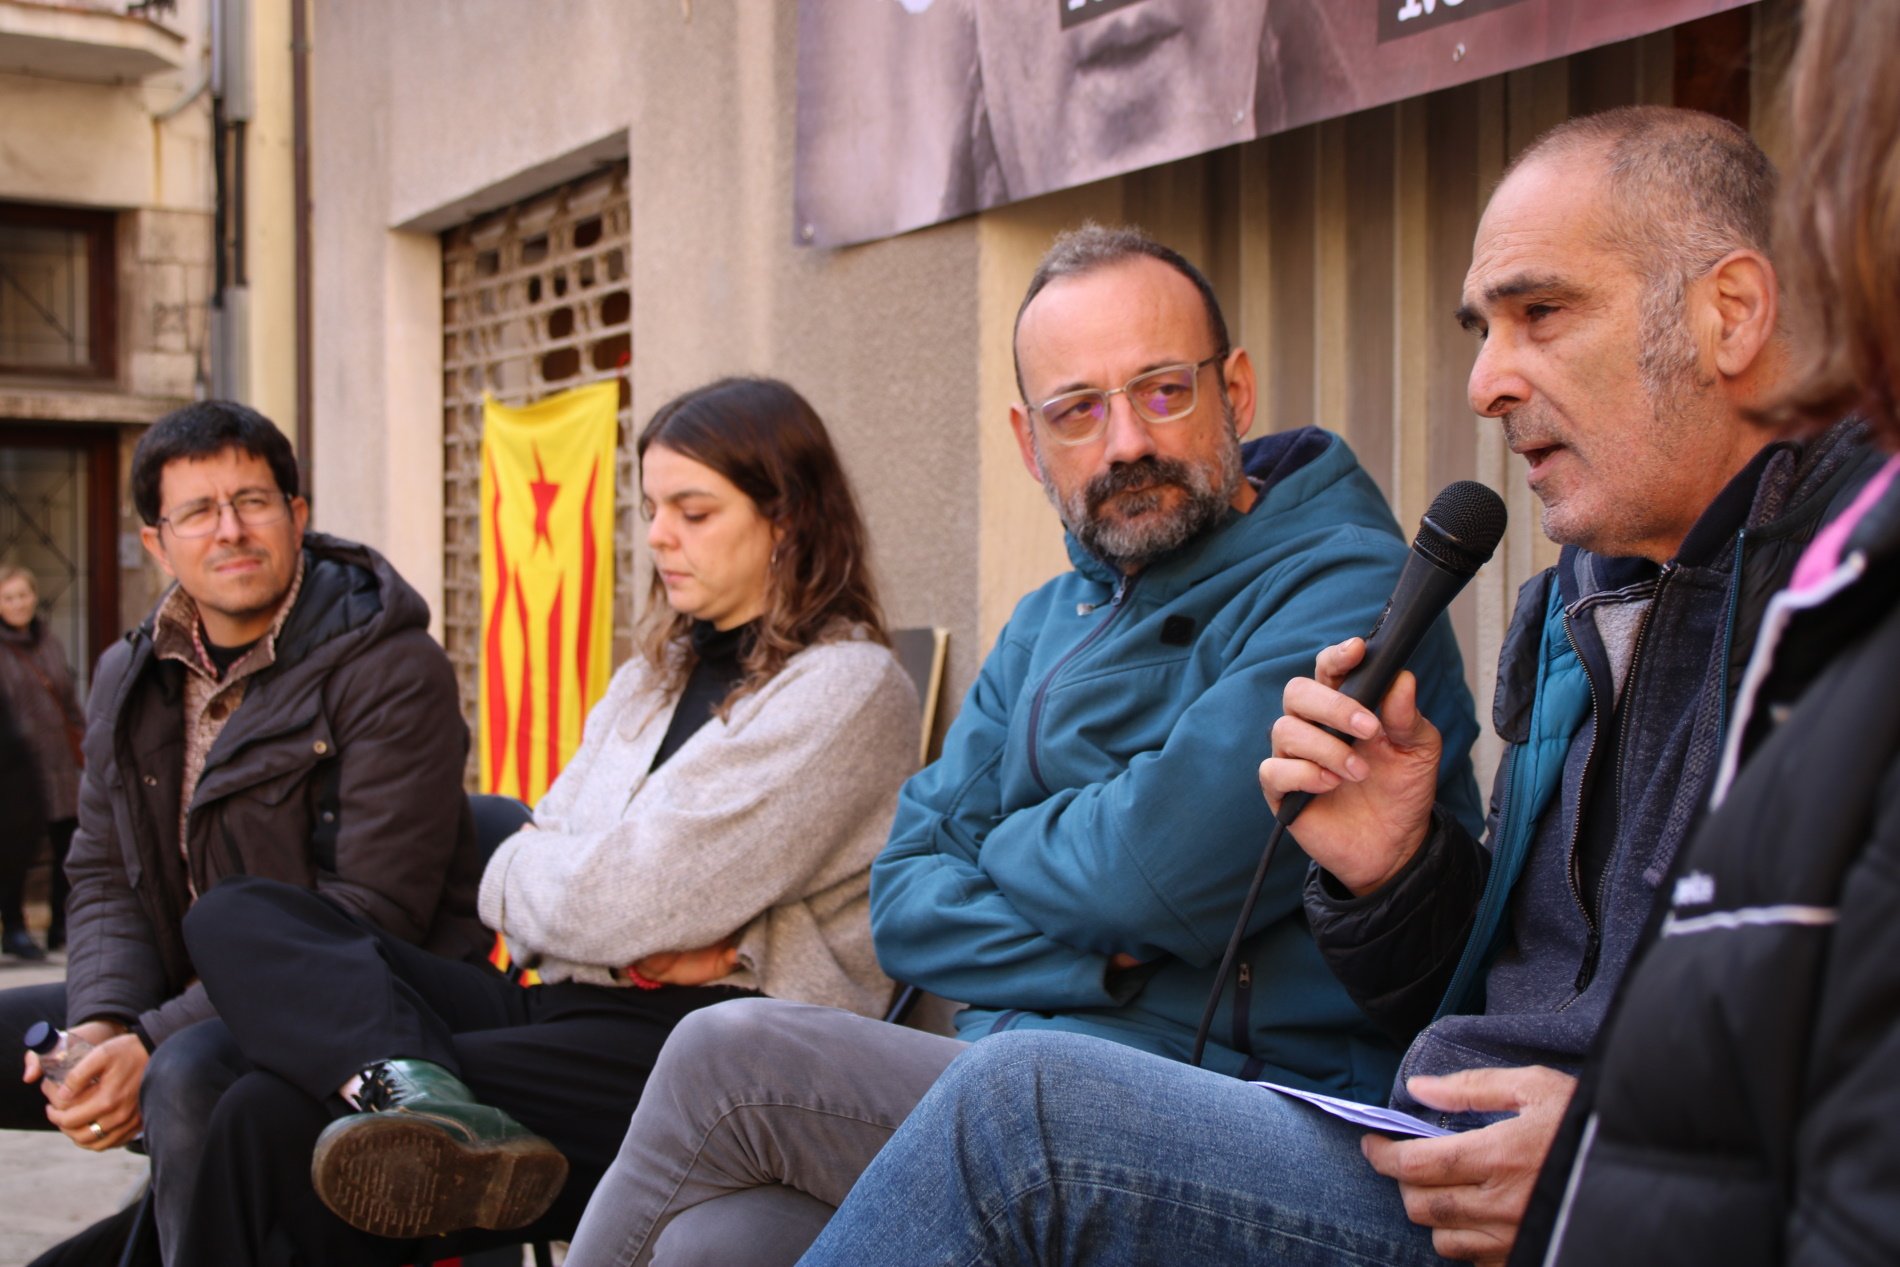 Ramon Piqué, detenido en la operación Garzón: "La represión se ha multiplicado exponencialmente"